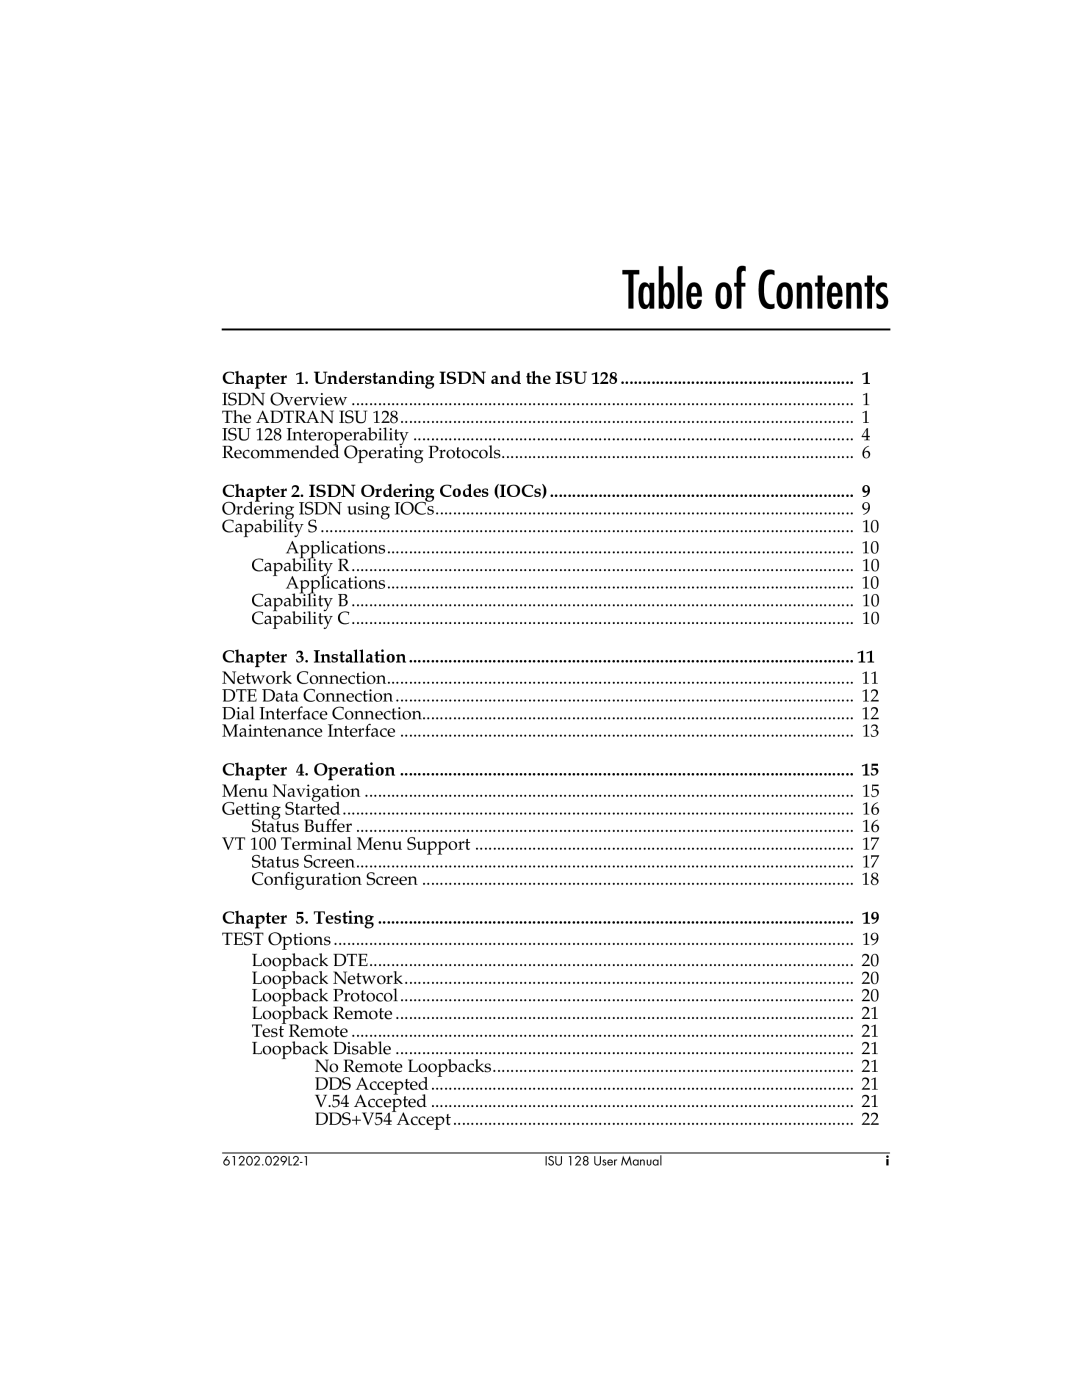 ADTRAN ISU 128 user manual Table of Contents 